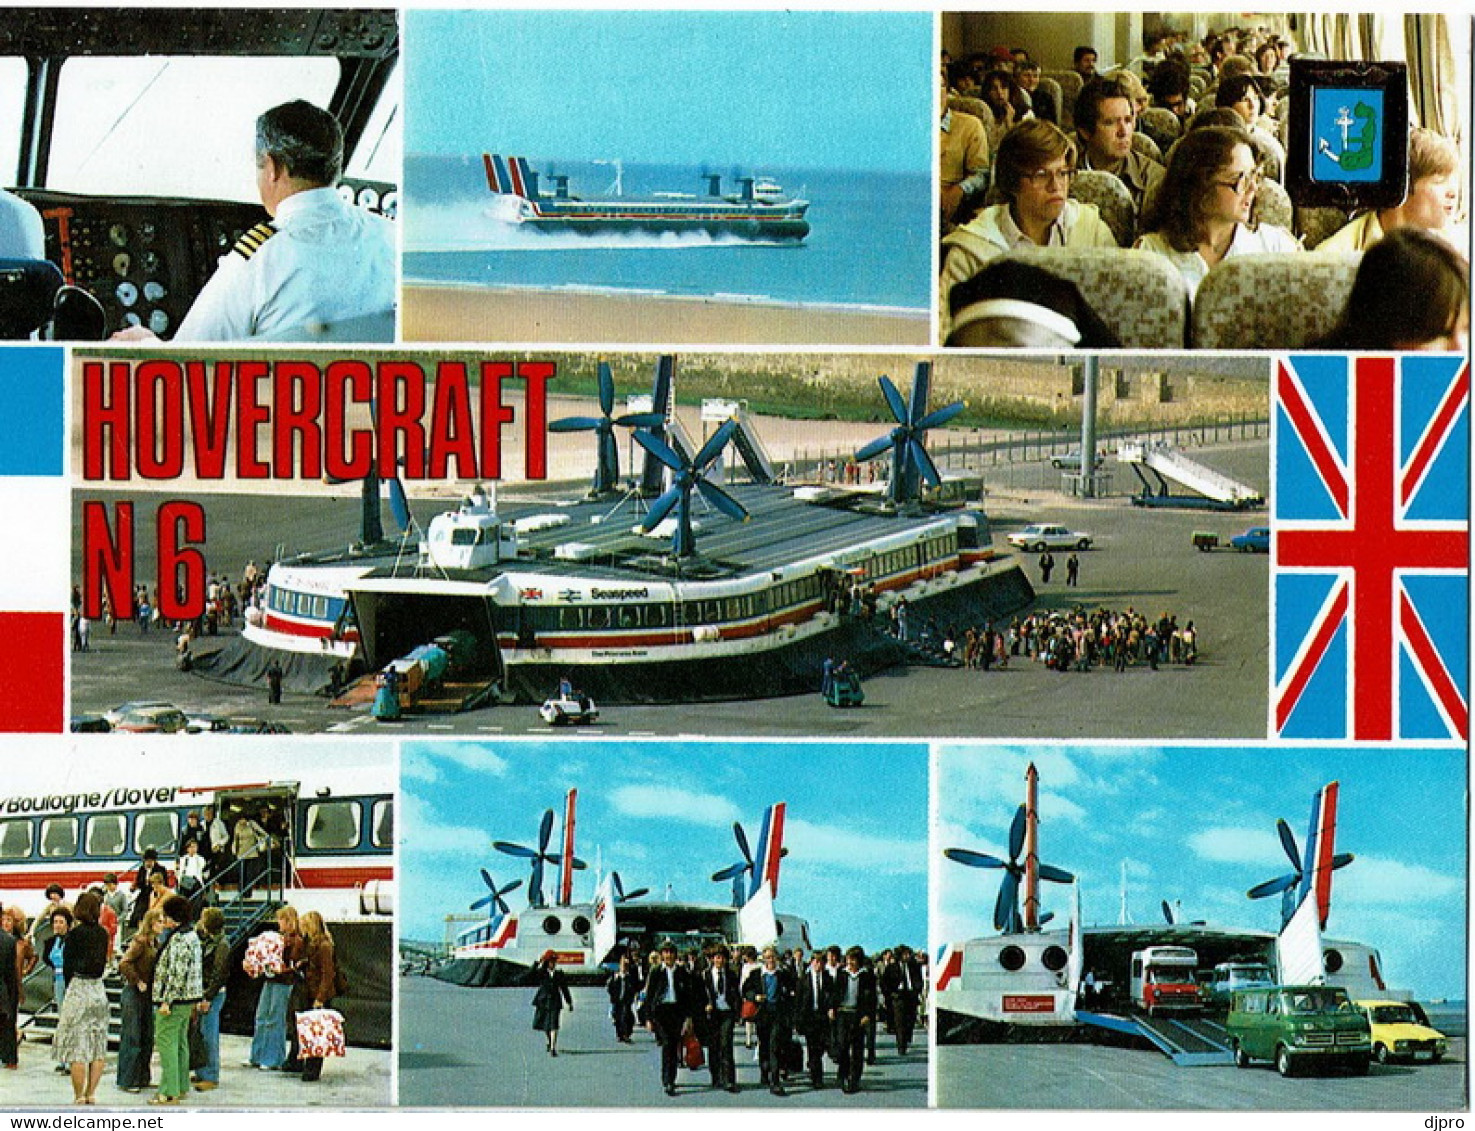 Hoovercraft - Hovercrafts